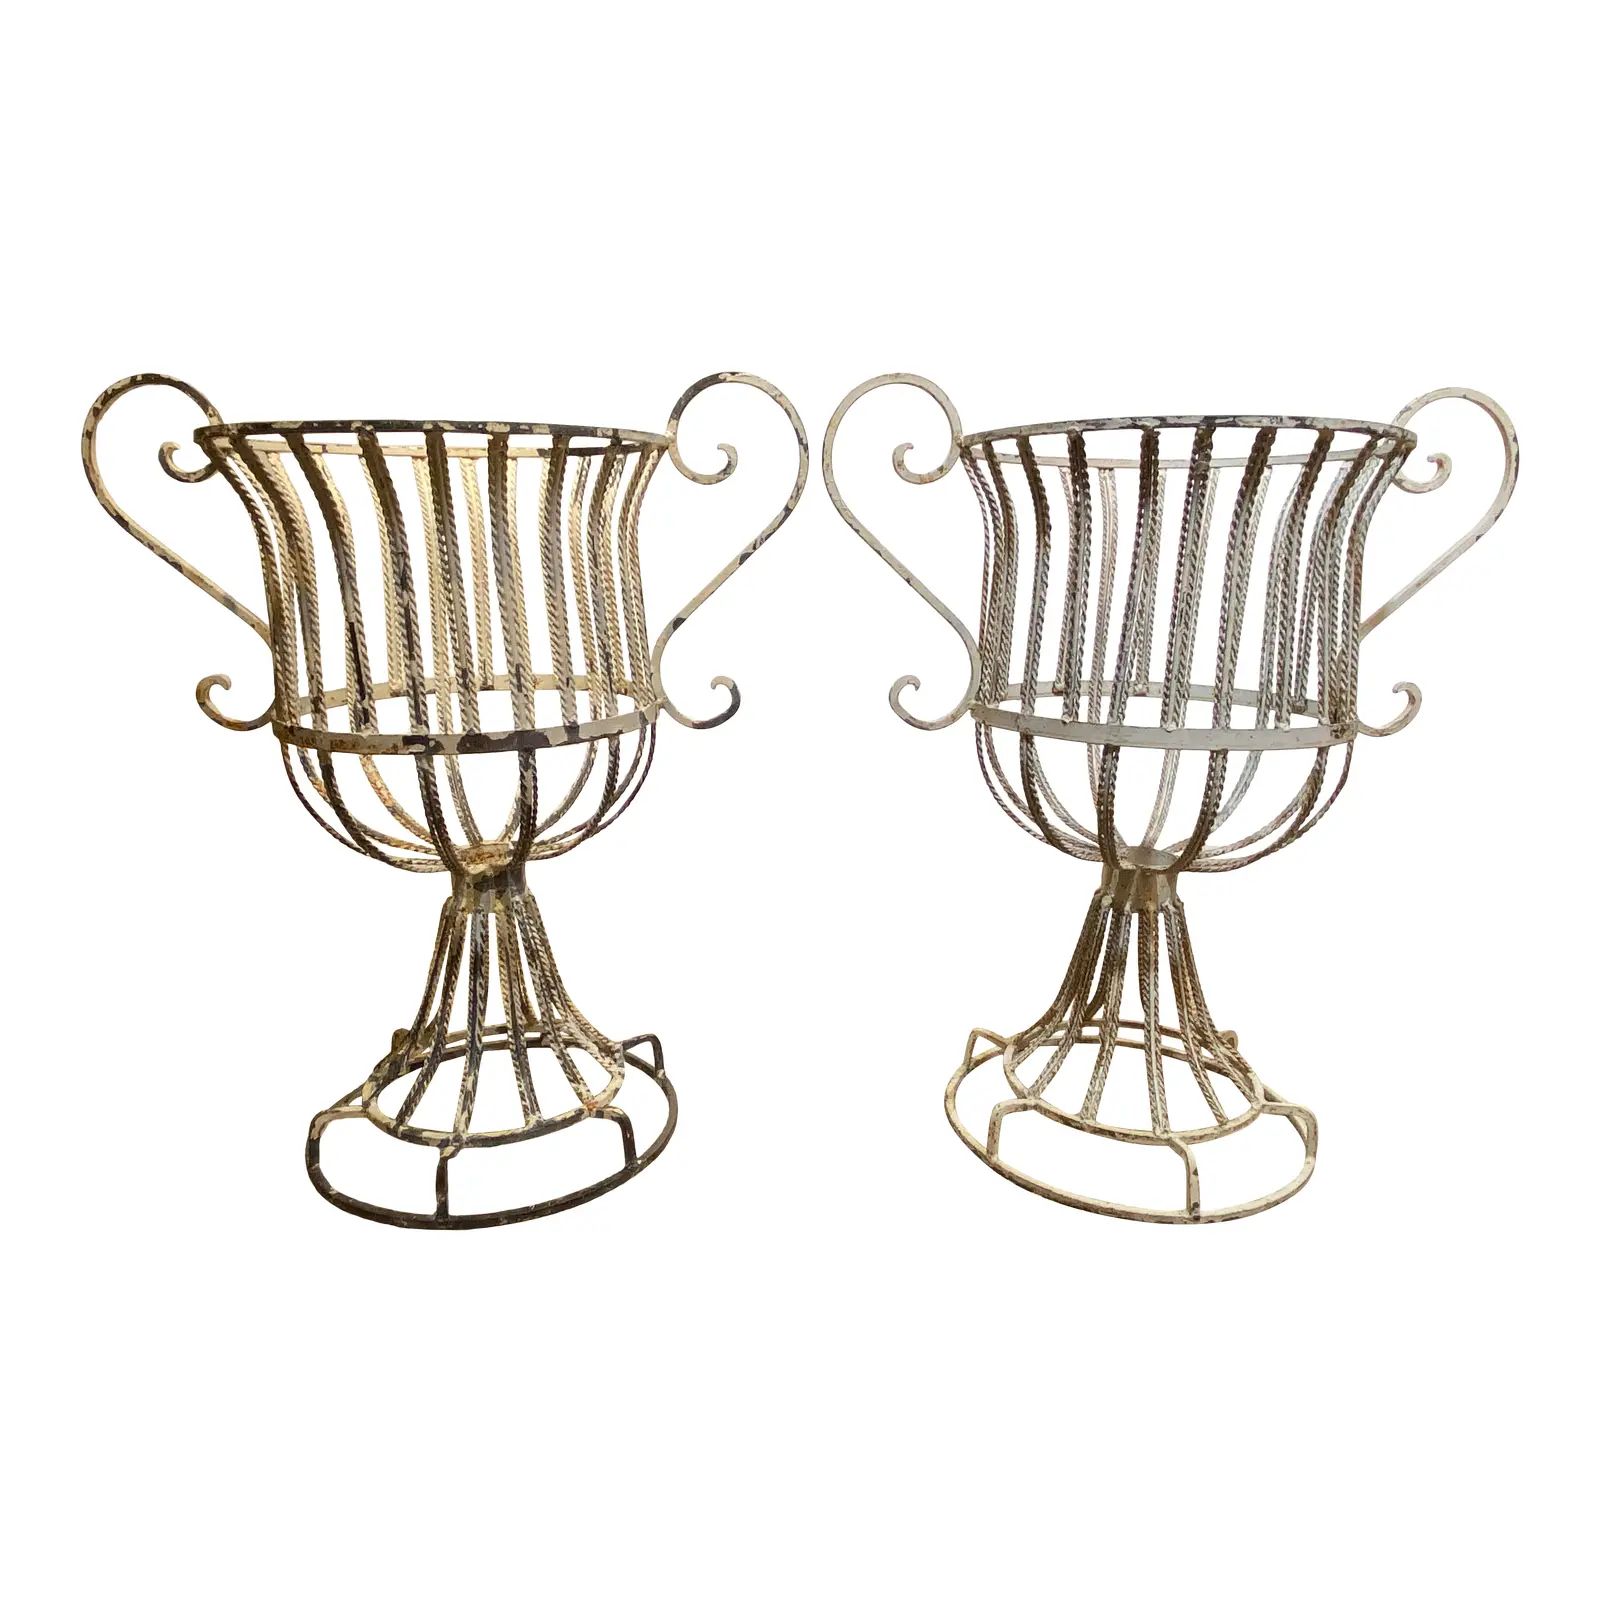 Antique English Metal Urns - a Pair | Chairish